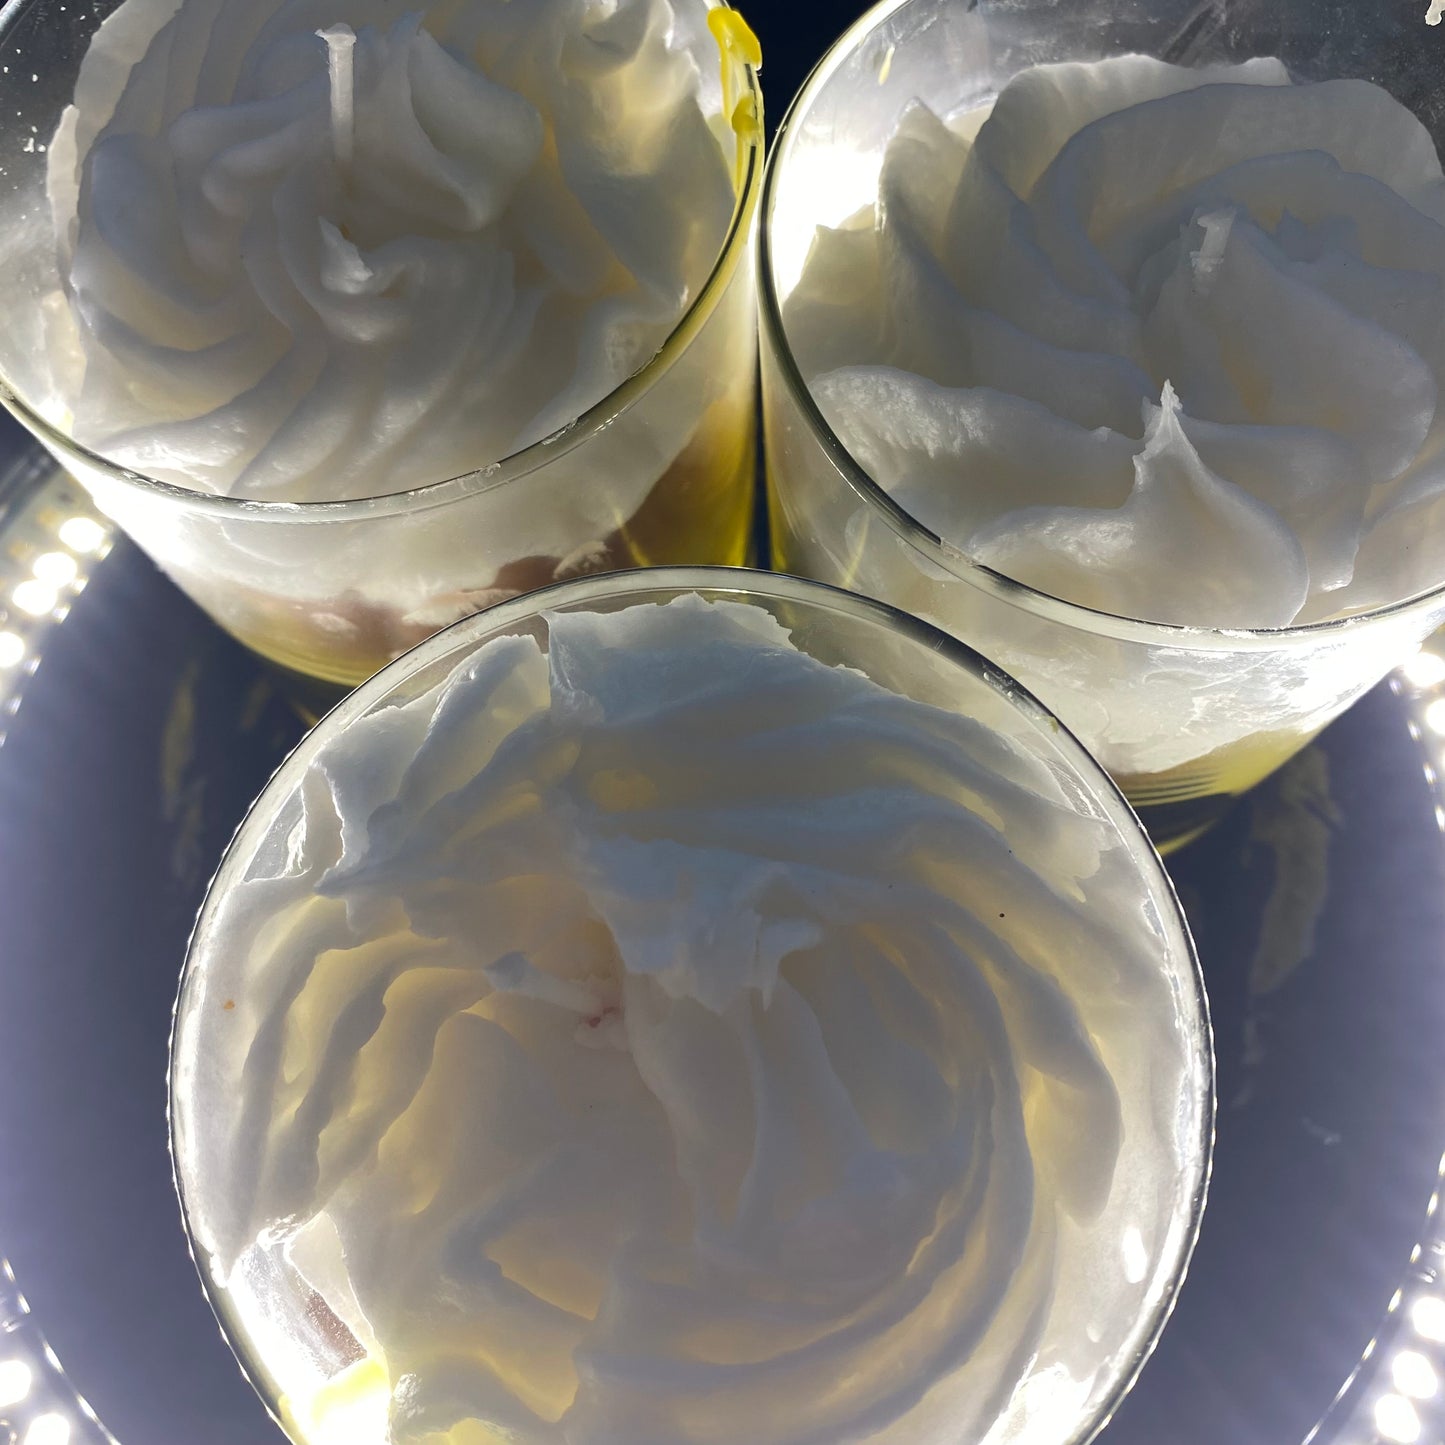 Lemon pound cake delight